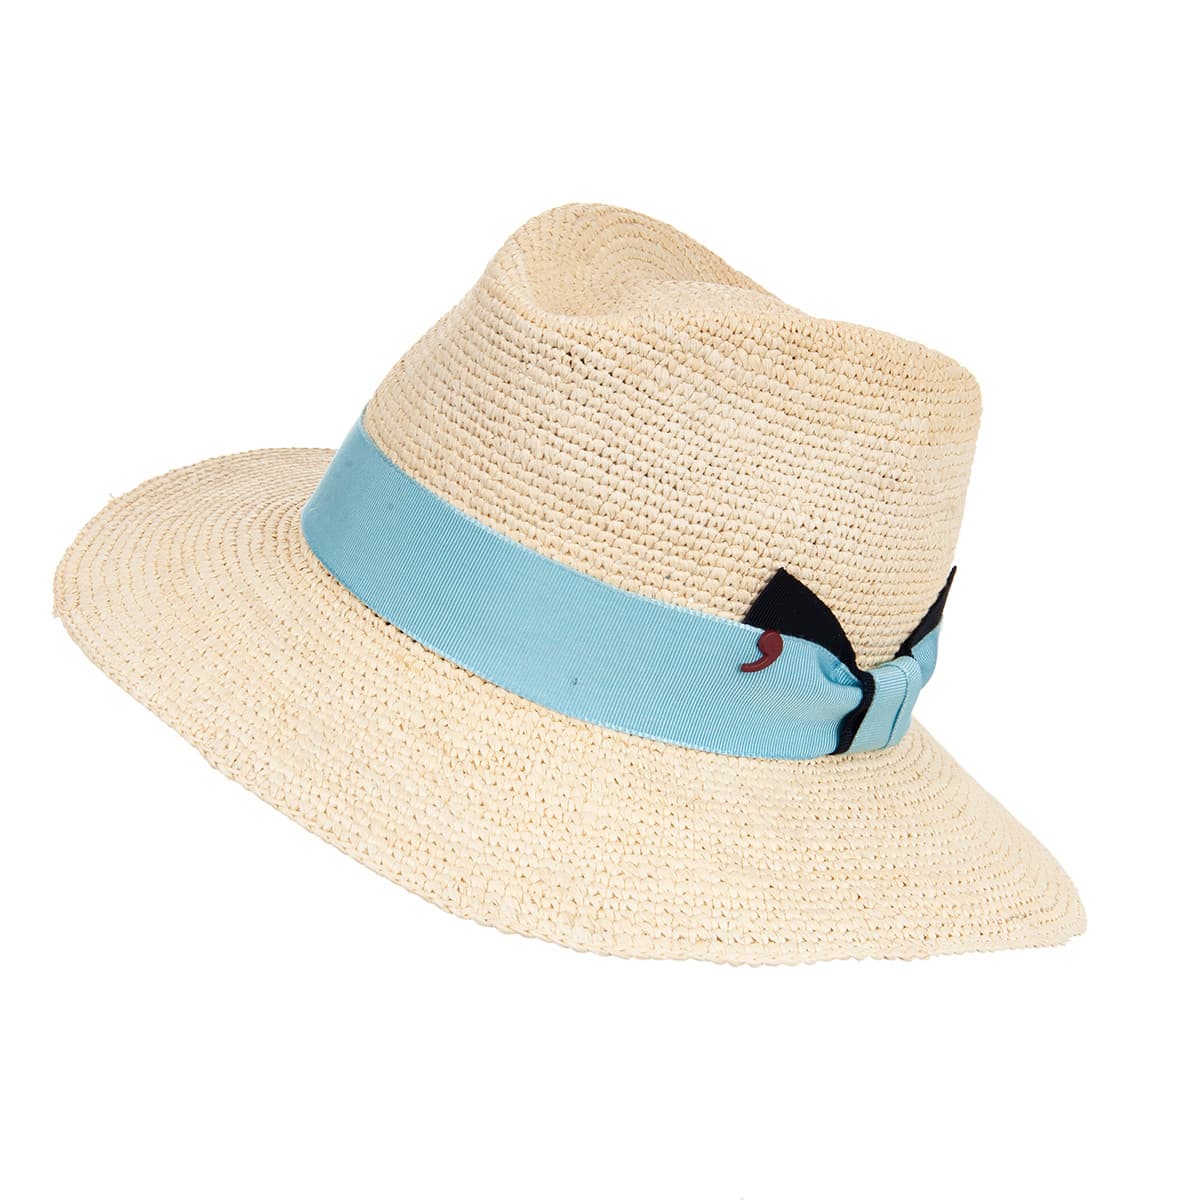 ALFONSO D'ESTE | Braided summer hat for men 100% Panama